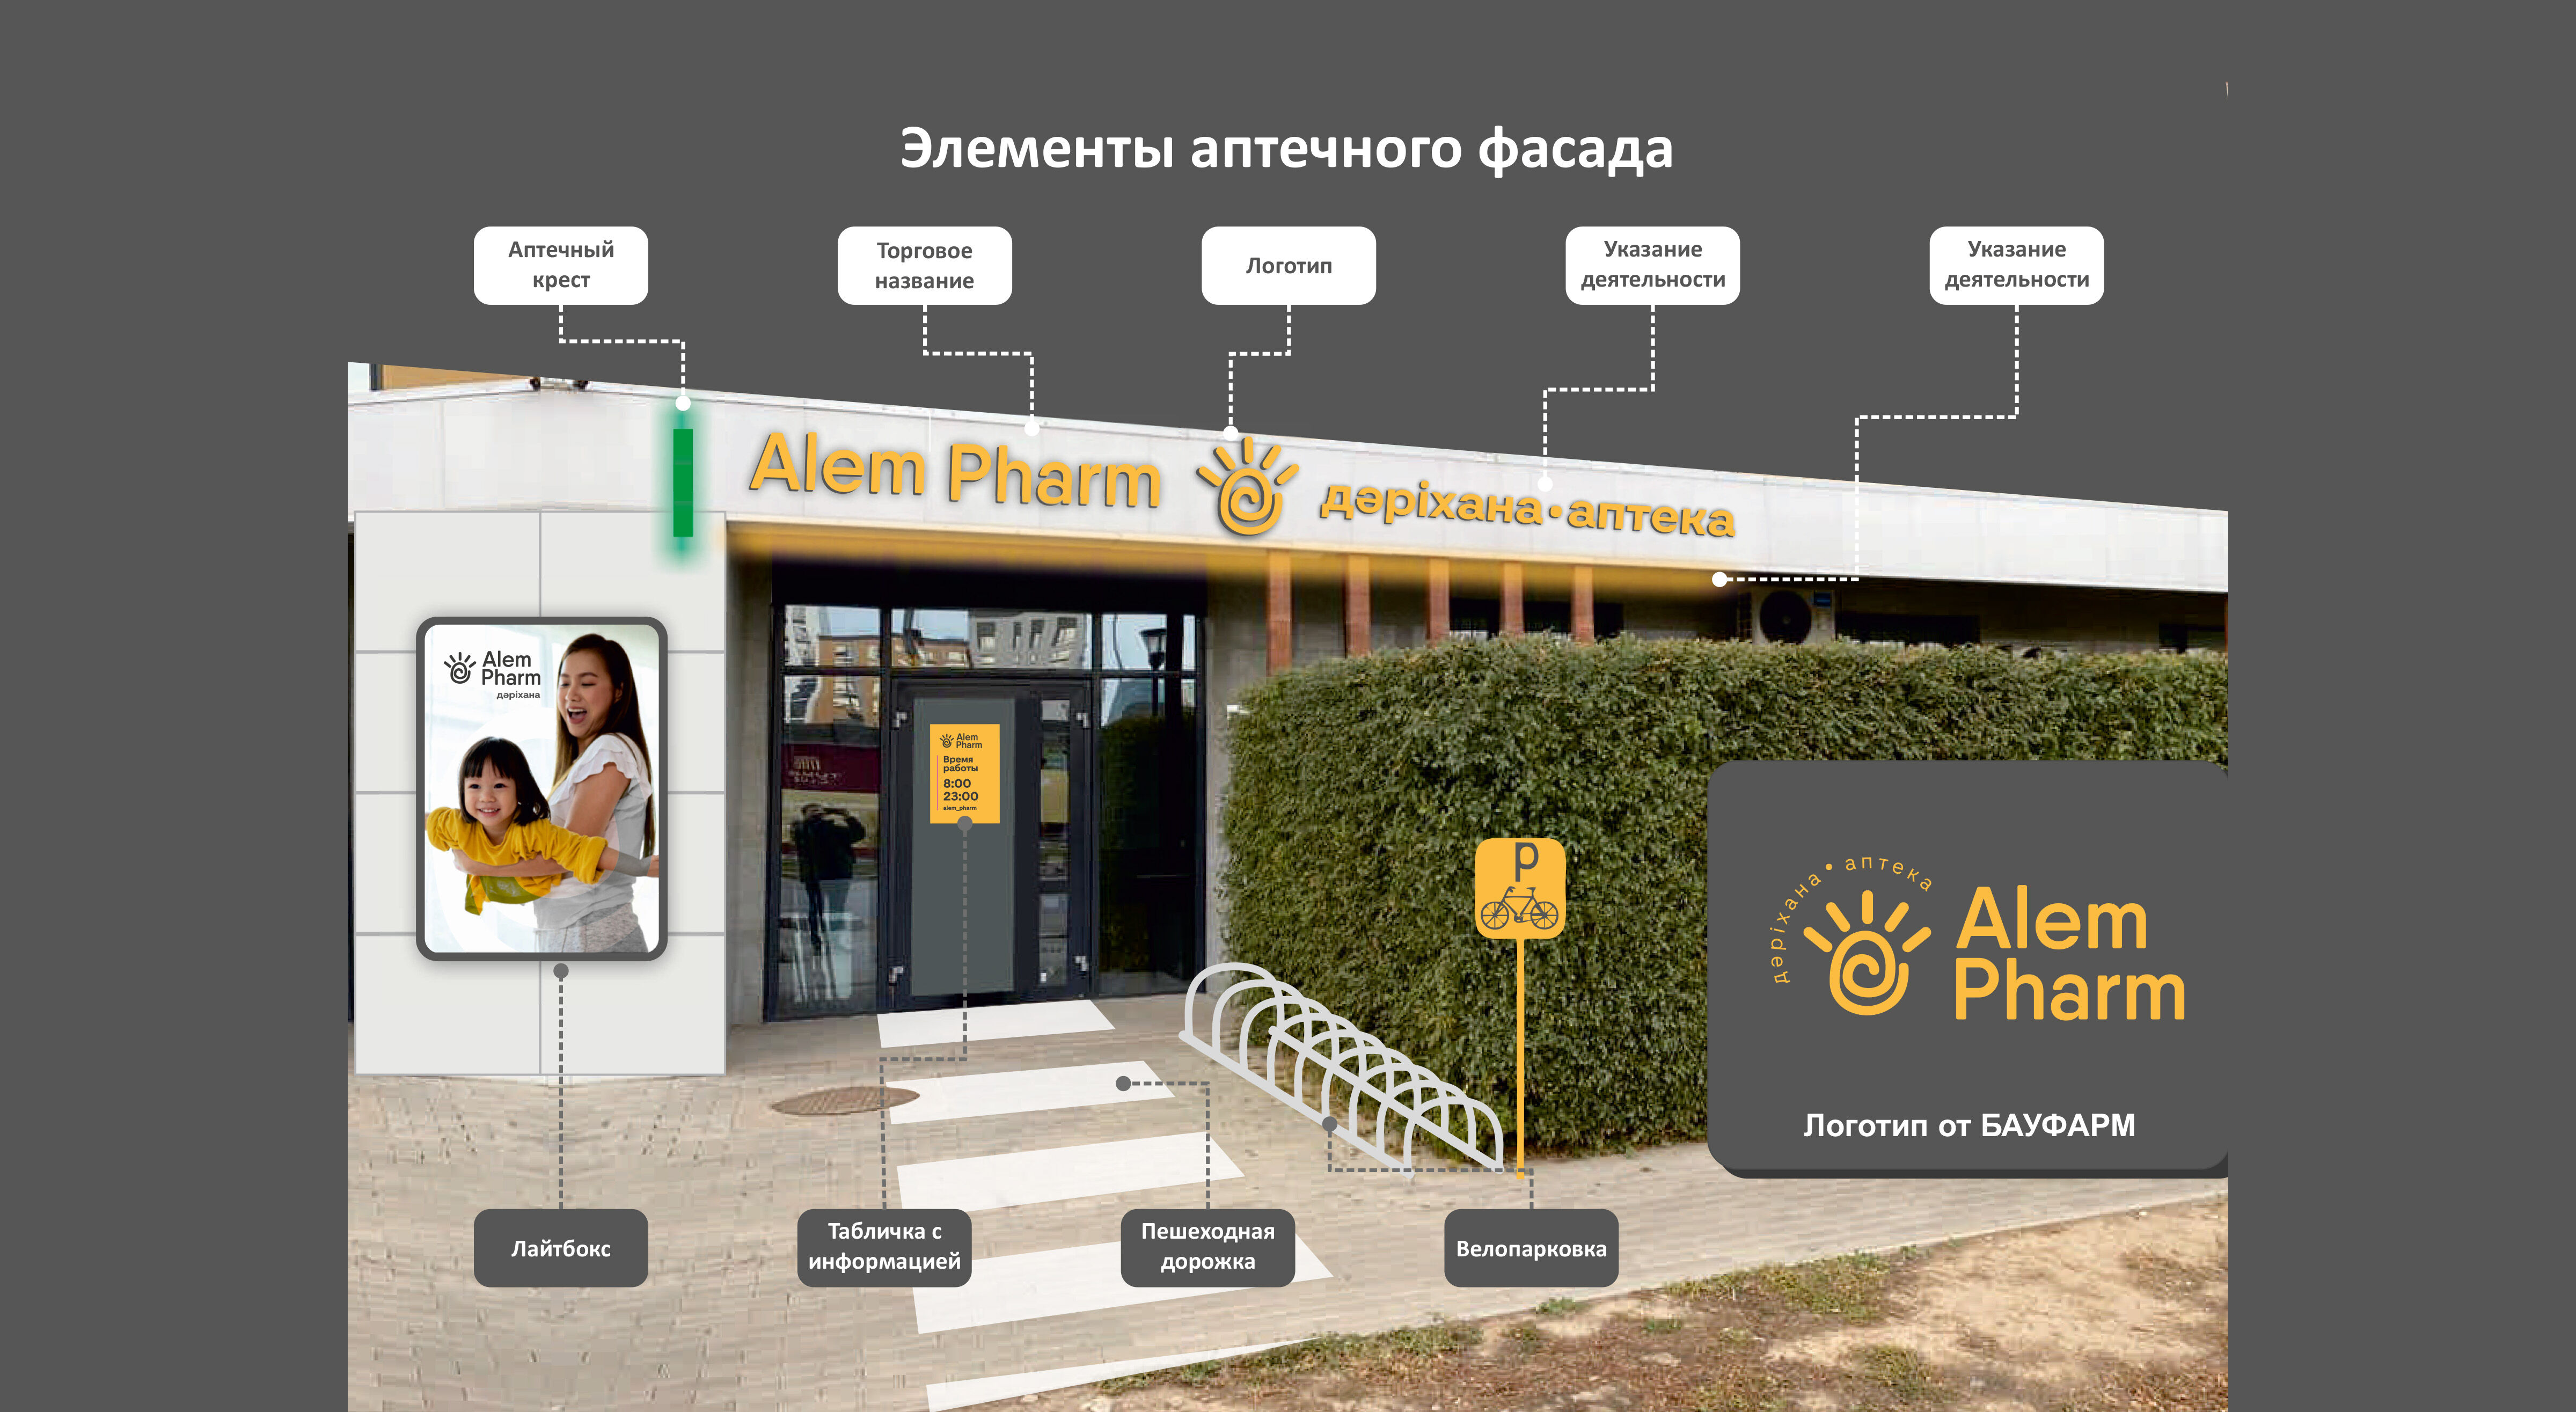 Внешнее оформление аптеки. Проект фасада аптеки от БАУФАРМ